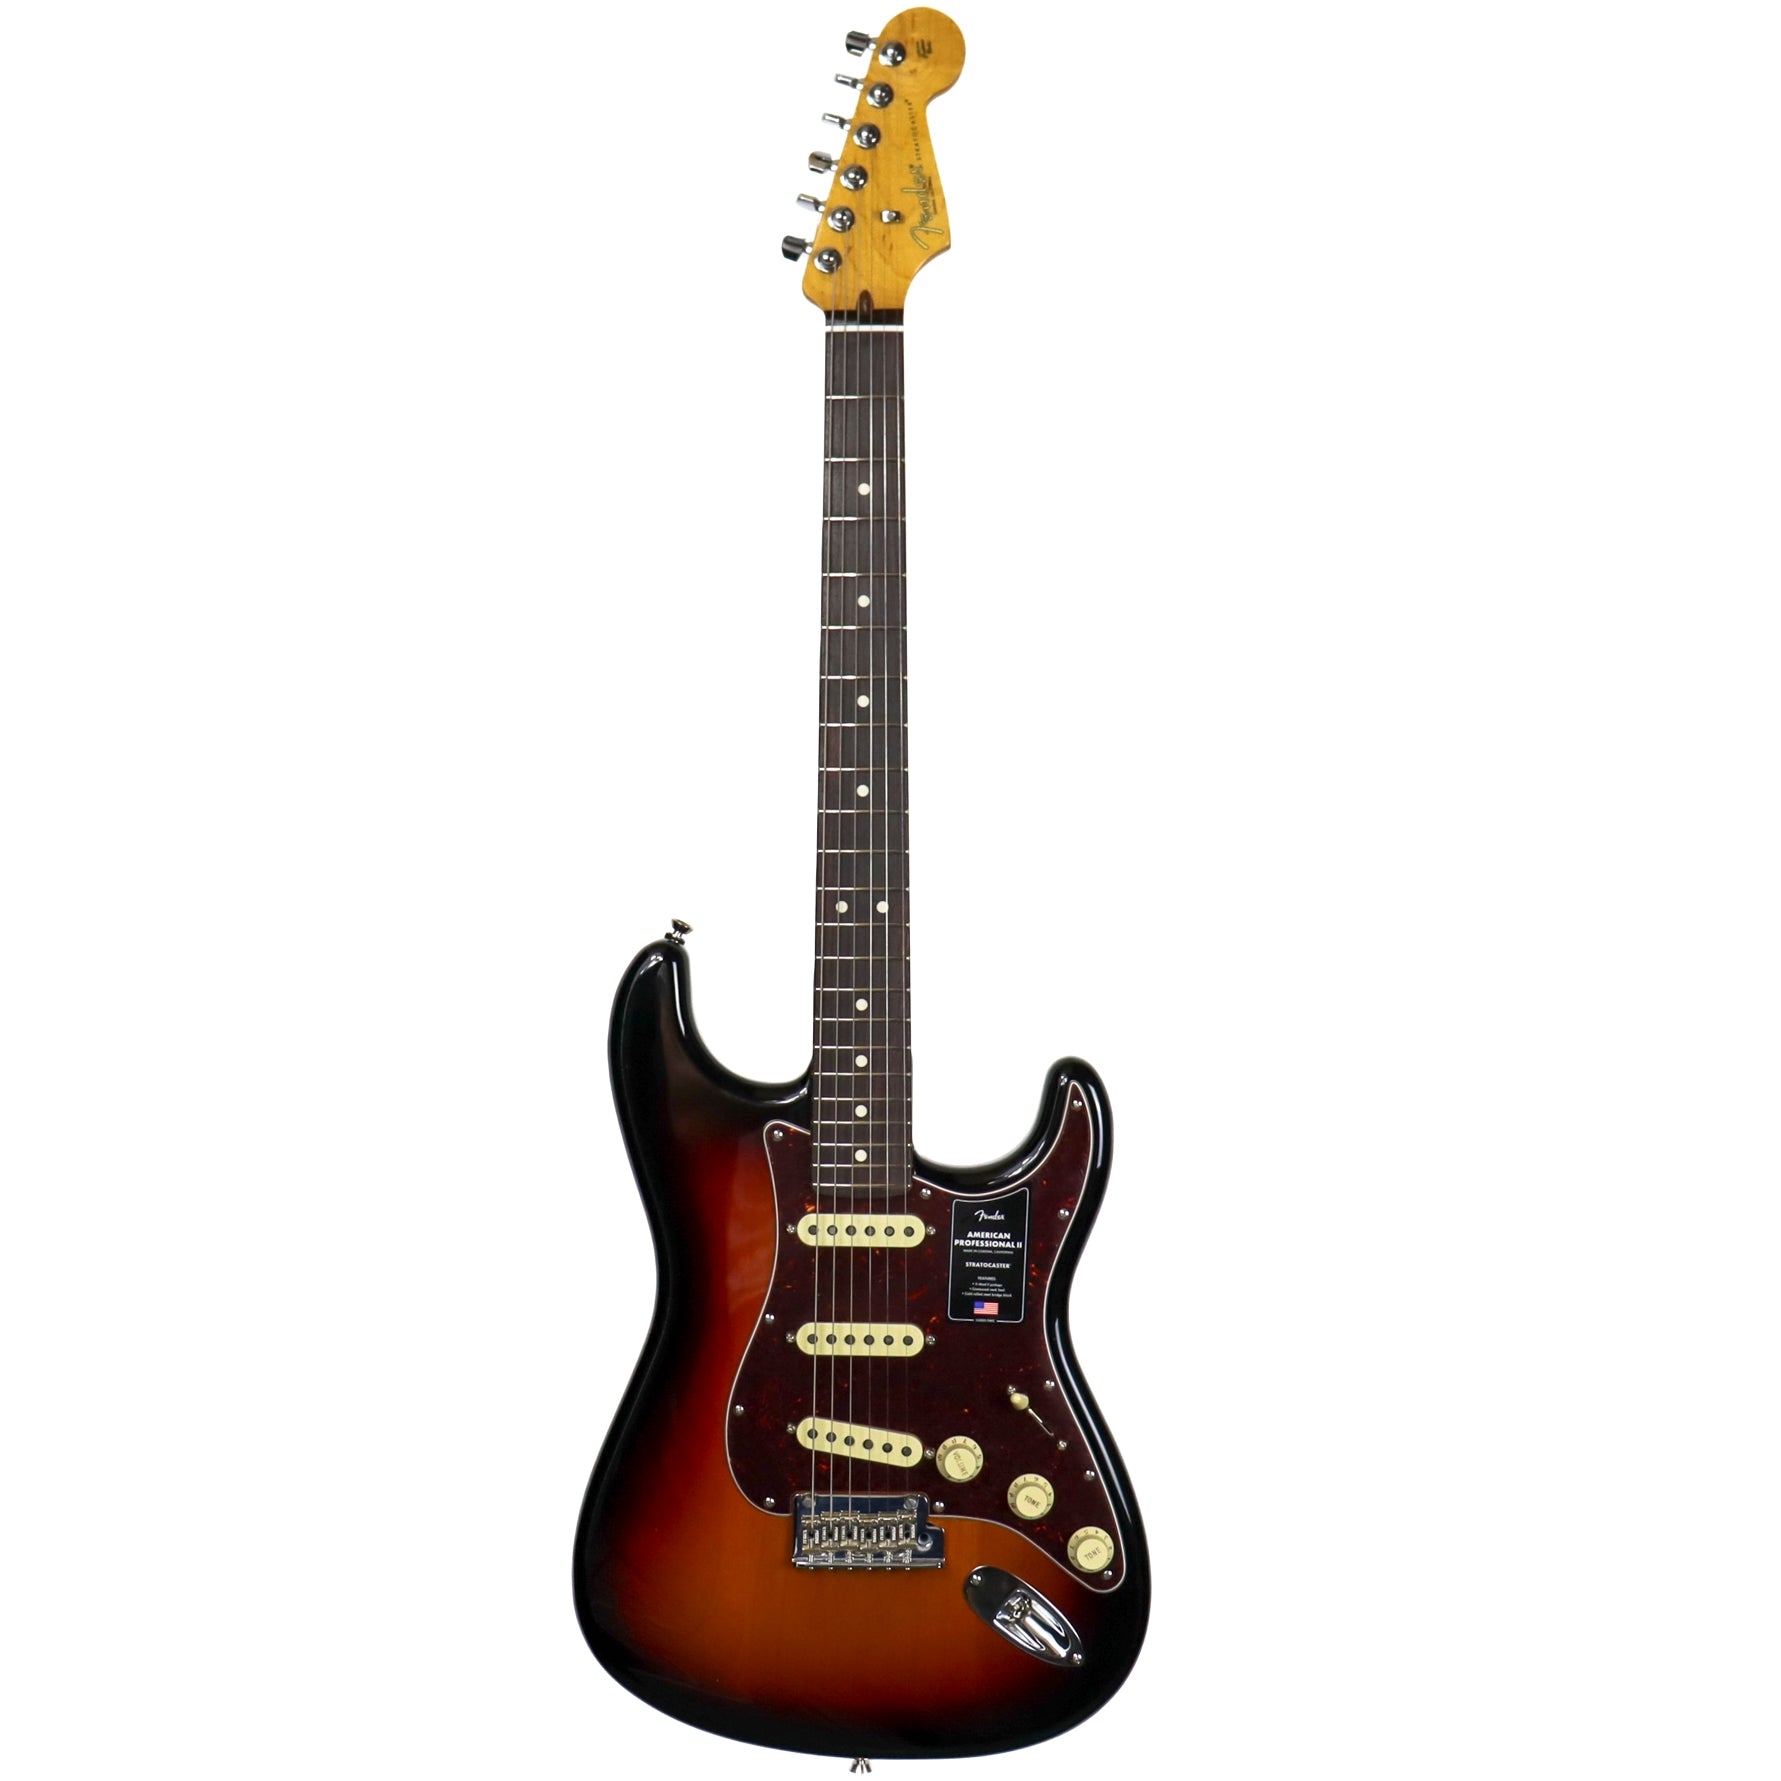 American Professional Stratocaster